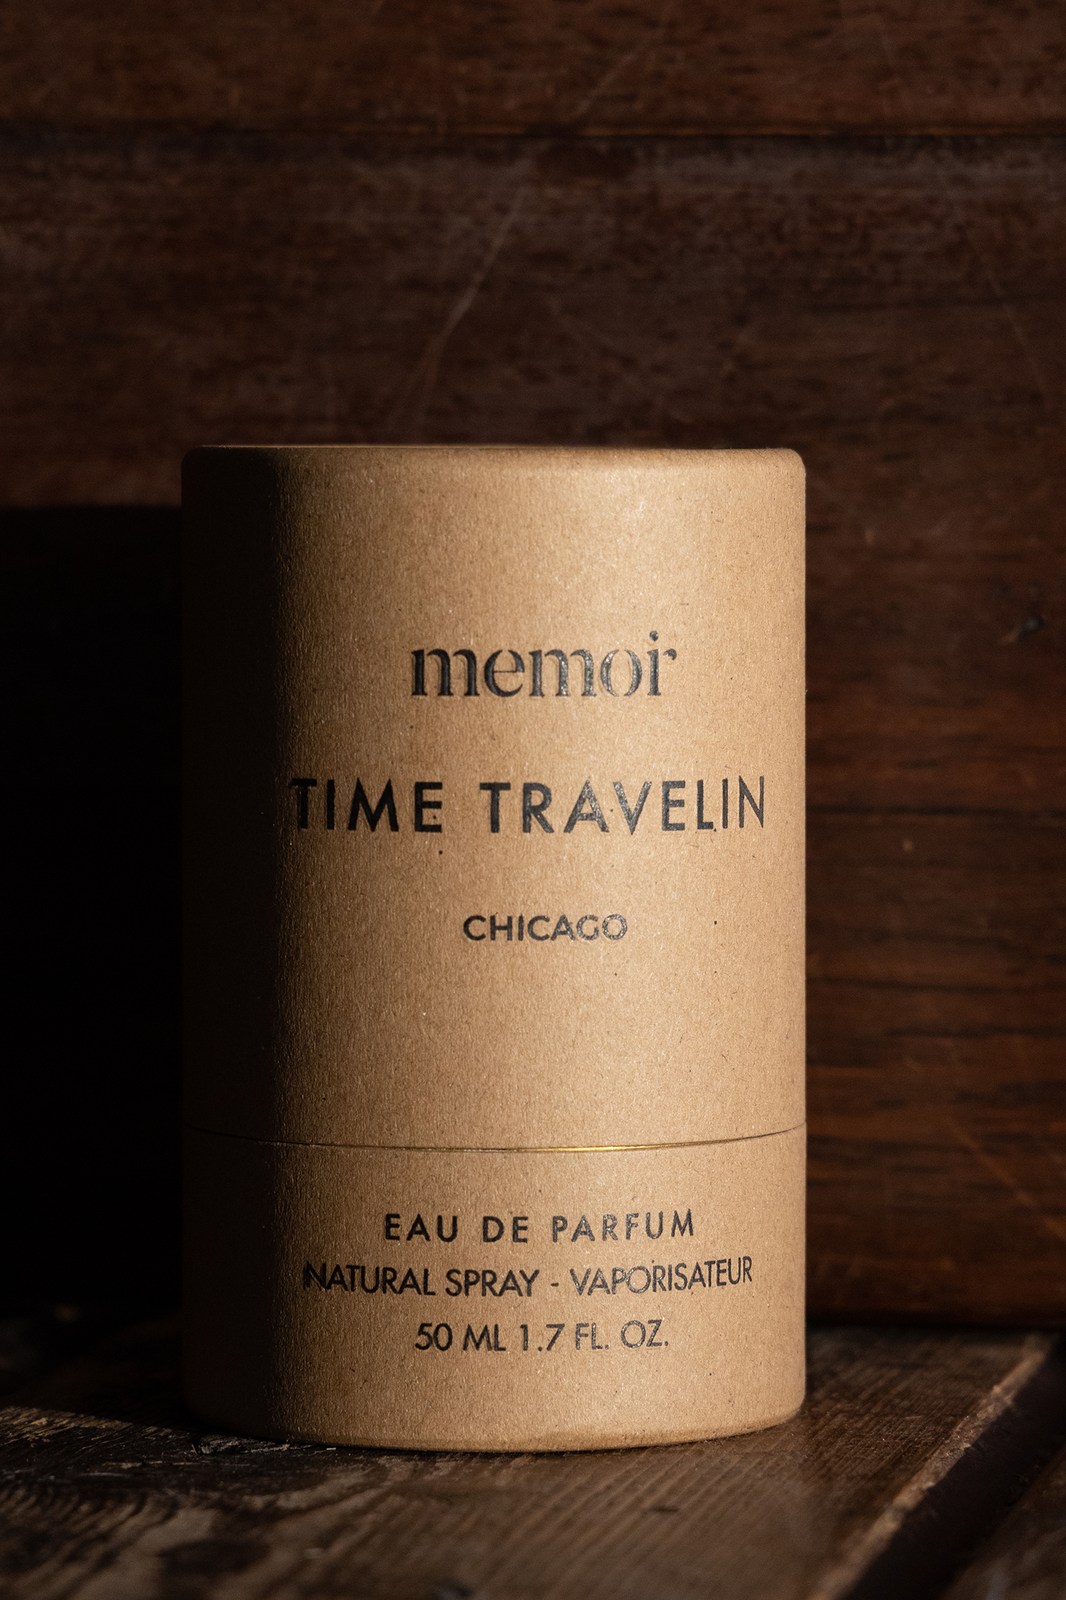 Memoir “Time Travelin”